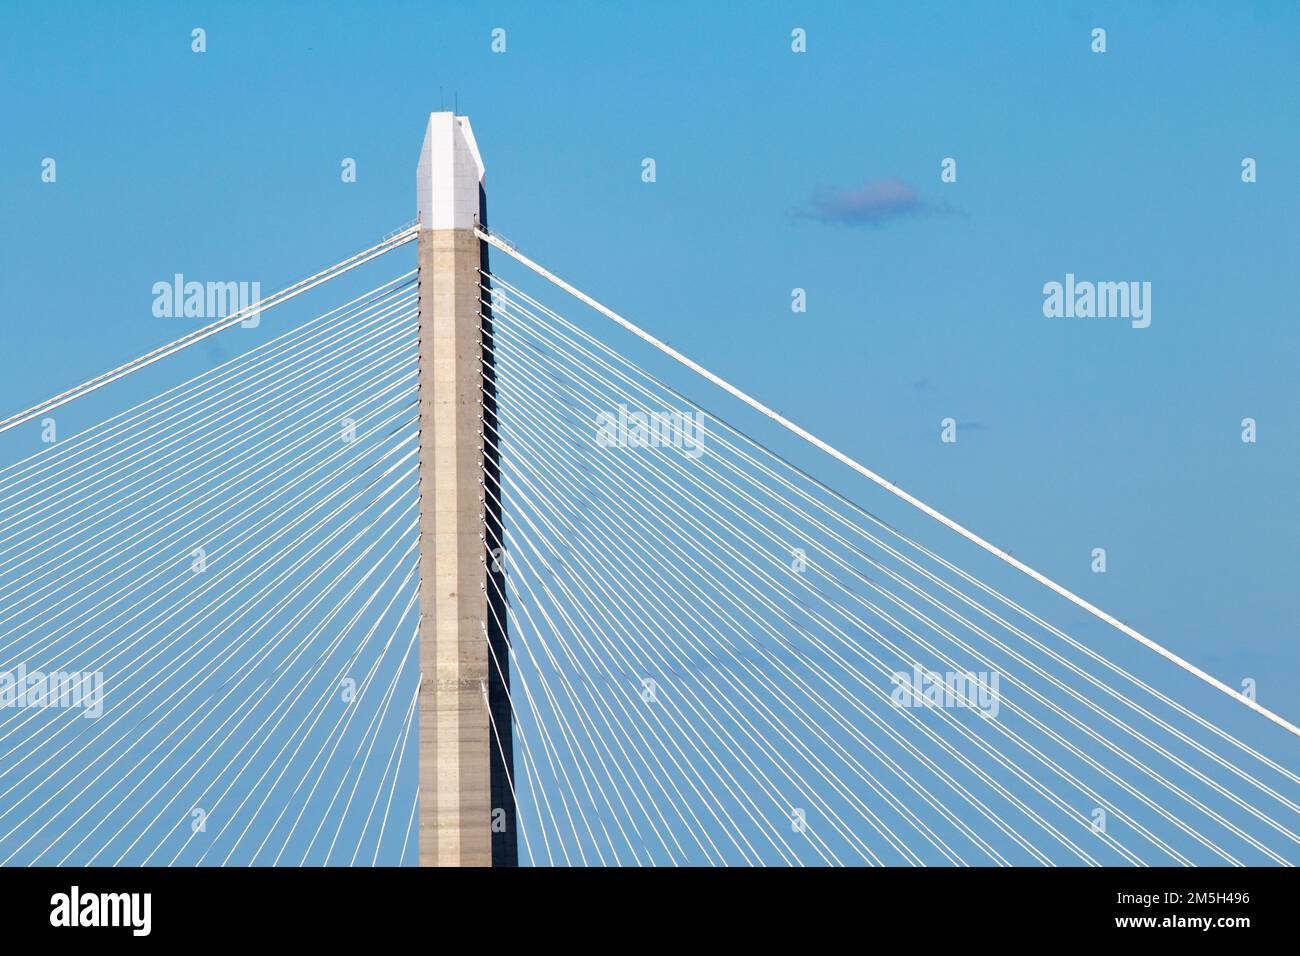 Yavuz Sultan Selim Bridge Pillar, Aesthetic bridge pillar or pier isolated on a blue sky background. Architectural design.  322 meters tower. Stock Photo